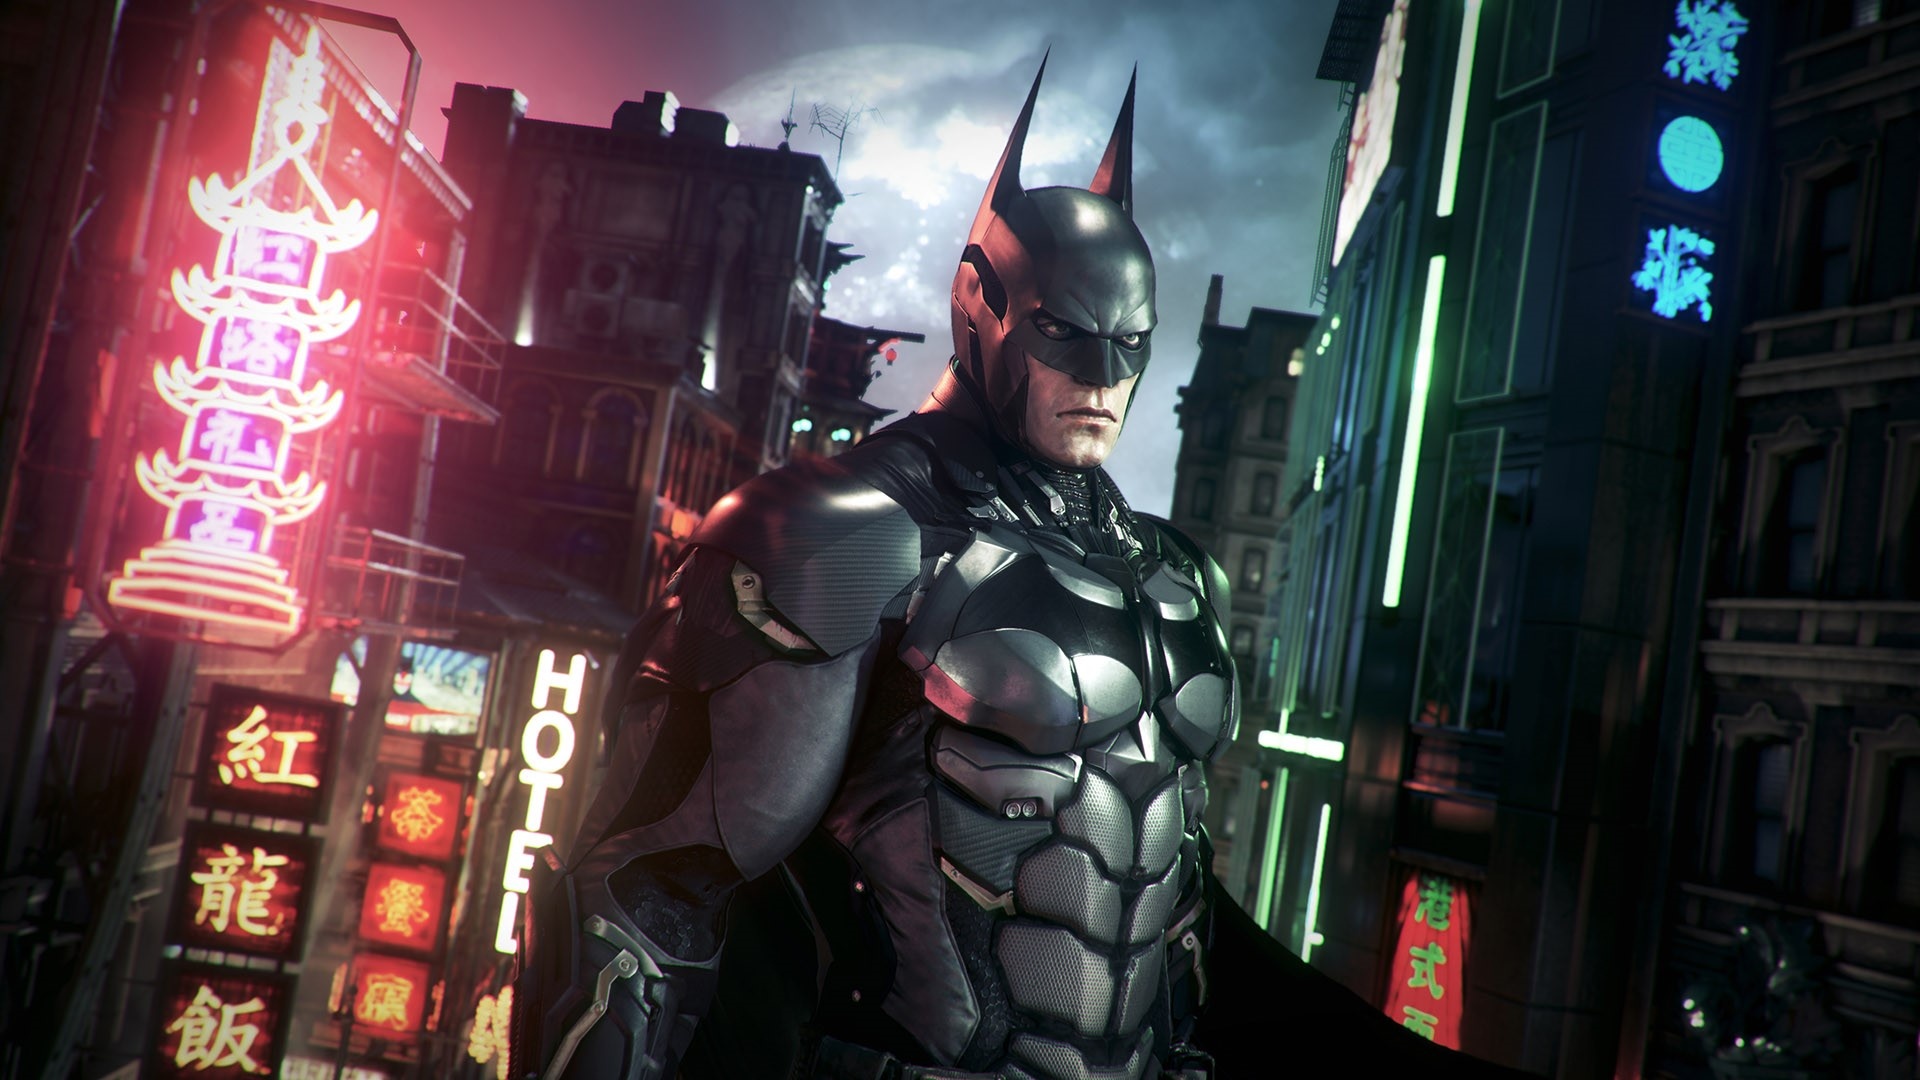 Robert Pattinson Batsuit Comes To Batman: Arkham Knight